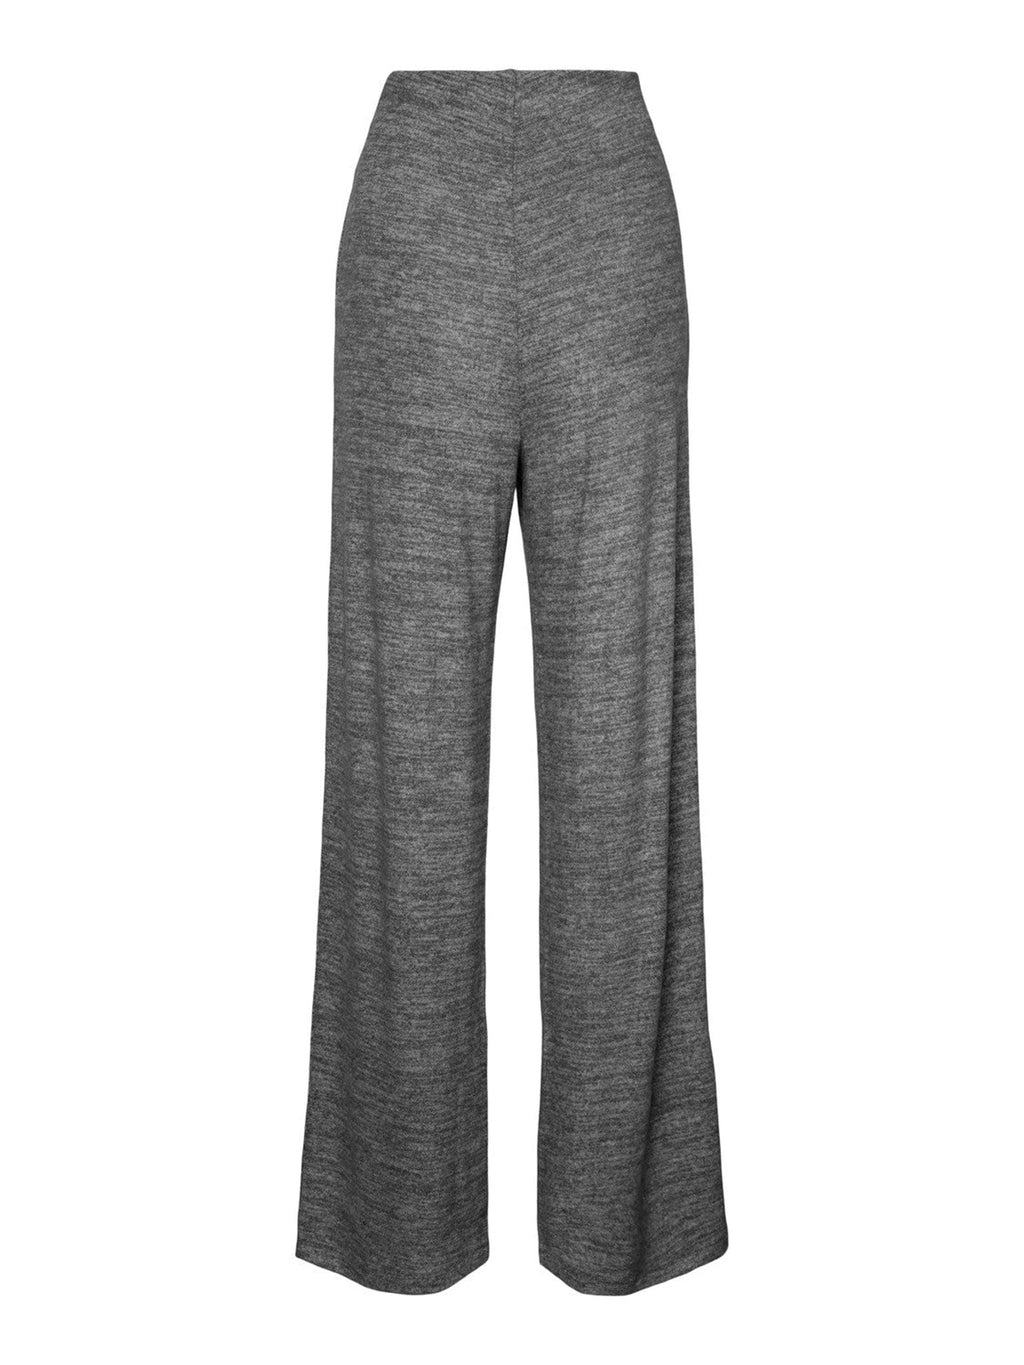 Pantalones de enfriamiento (pierna ancha) - gris oscuro